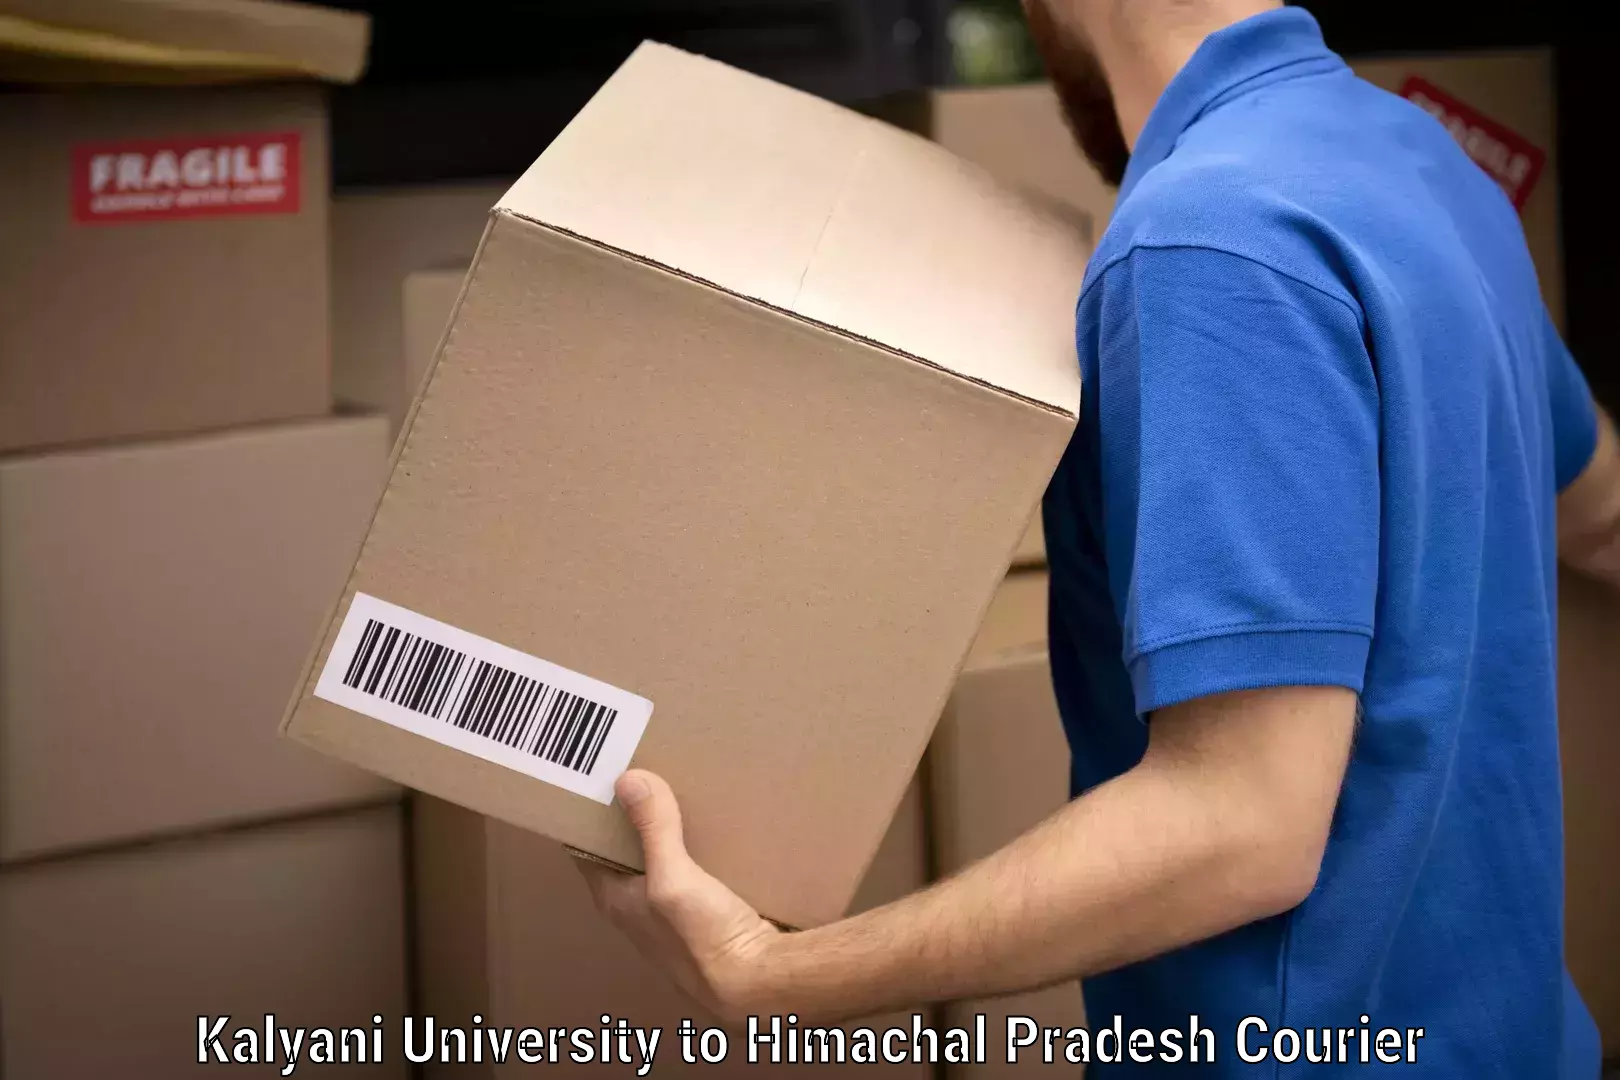 Efficient moving company Kalyani University to Himachal Pradesh